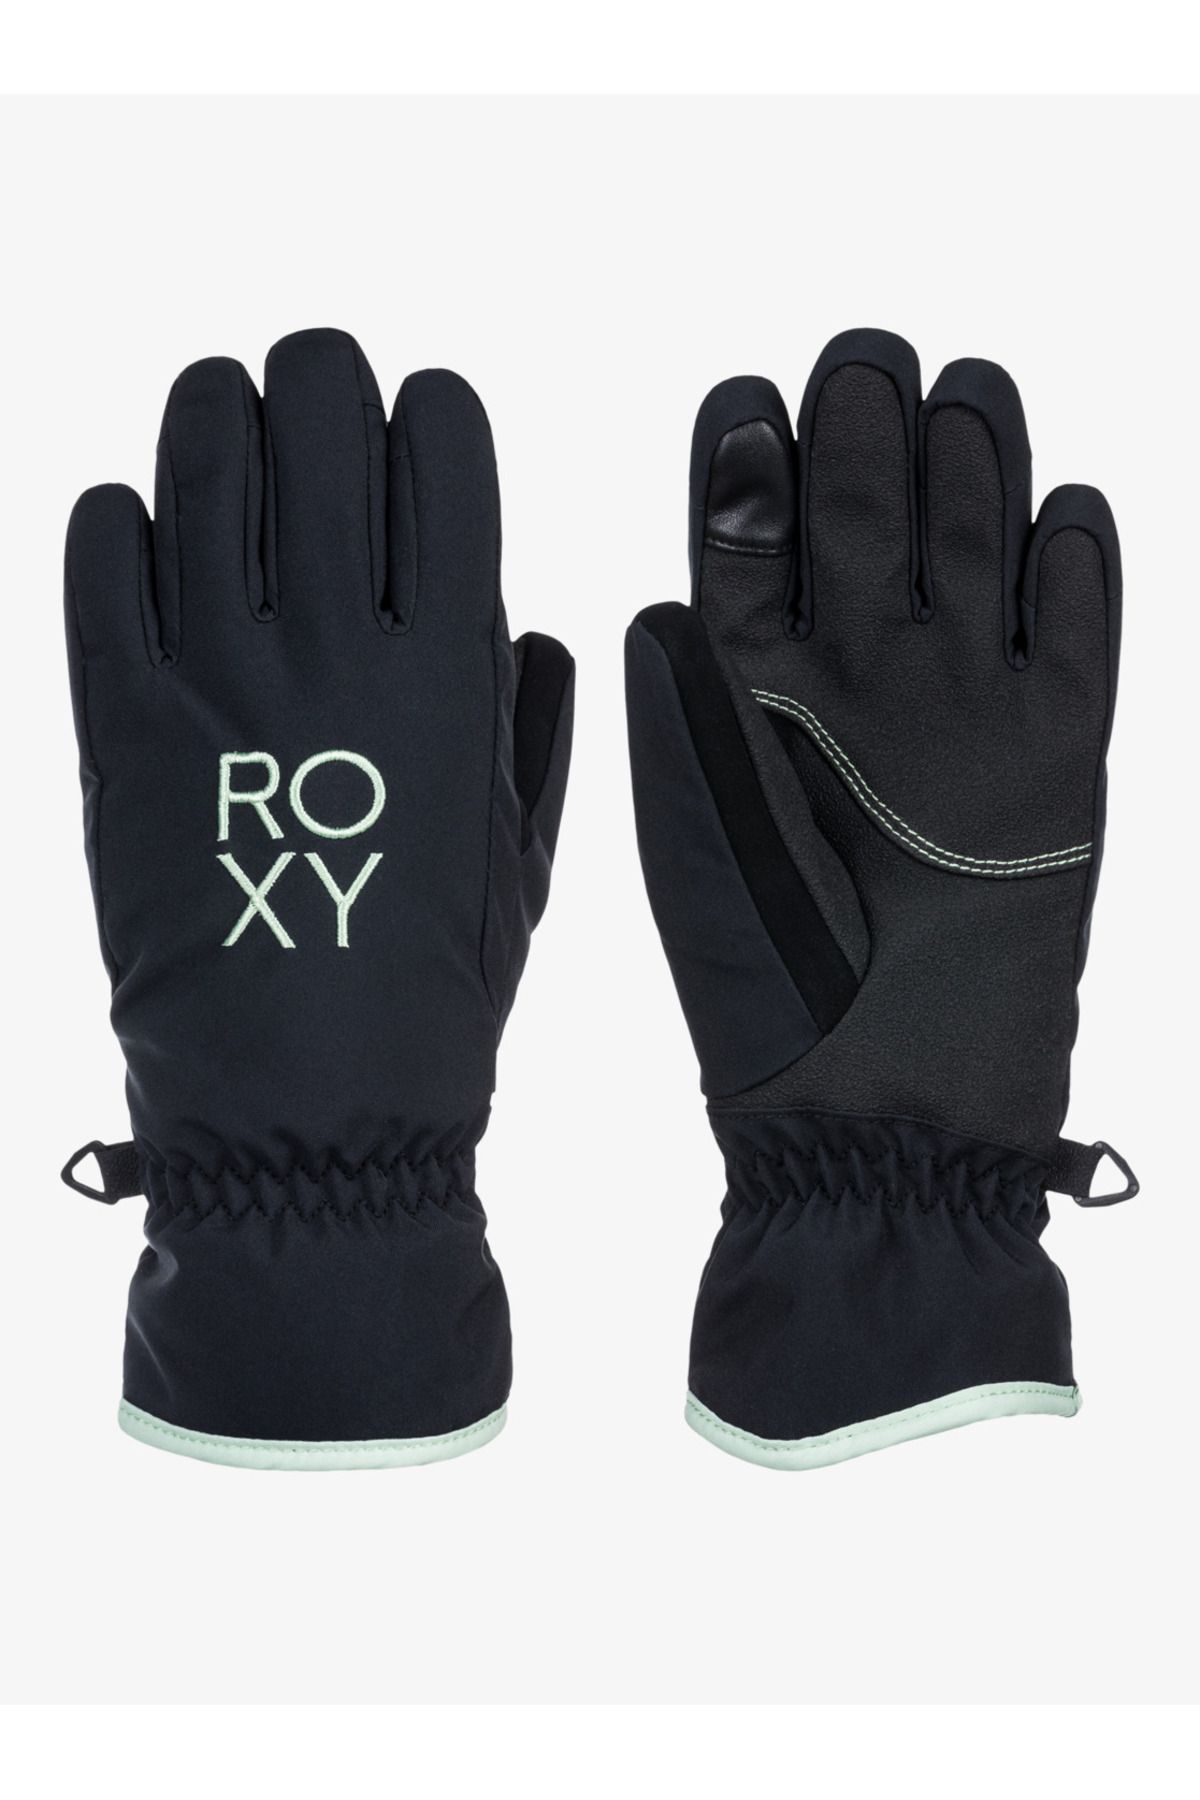 Roxy Freshfıeld Gırl Gloves Çocuk Antrasit Eldiven Erghn03041-kvj0